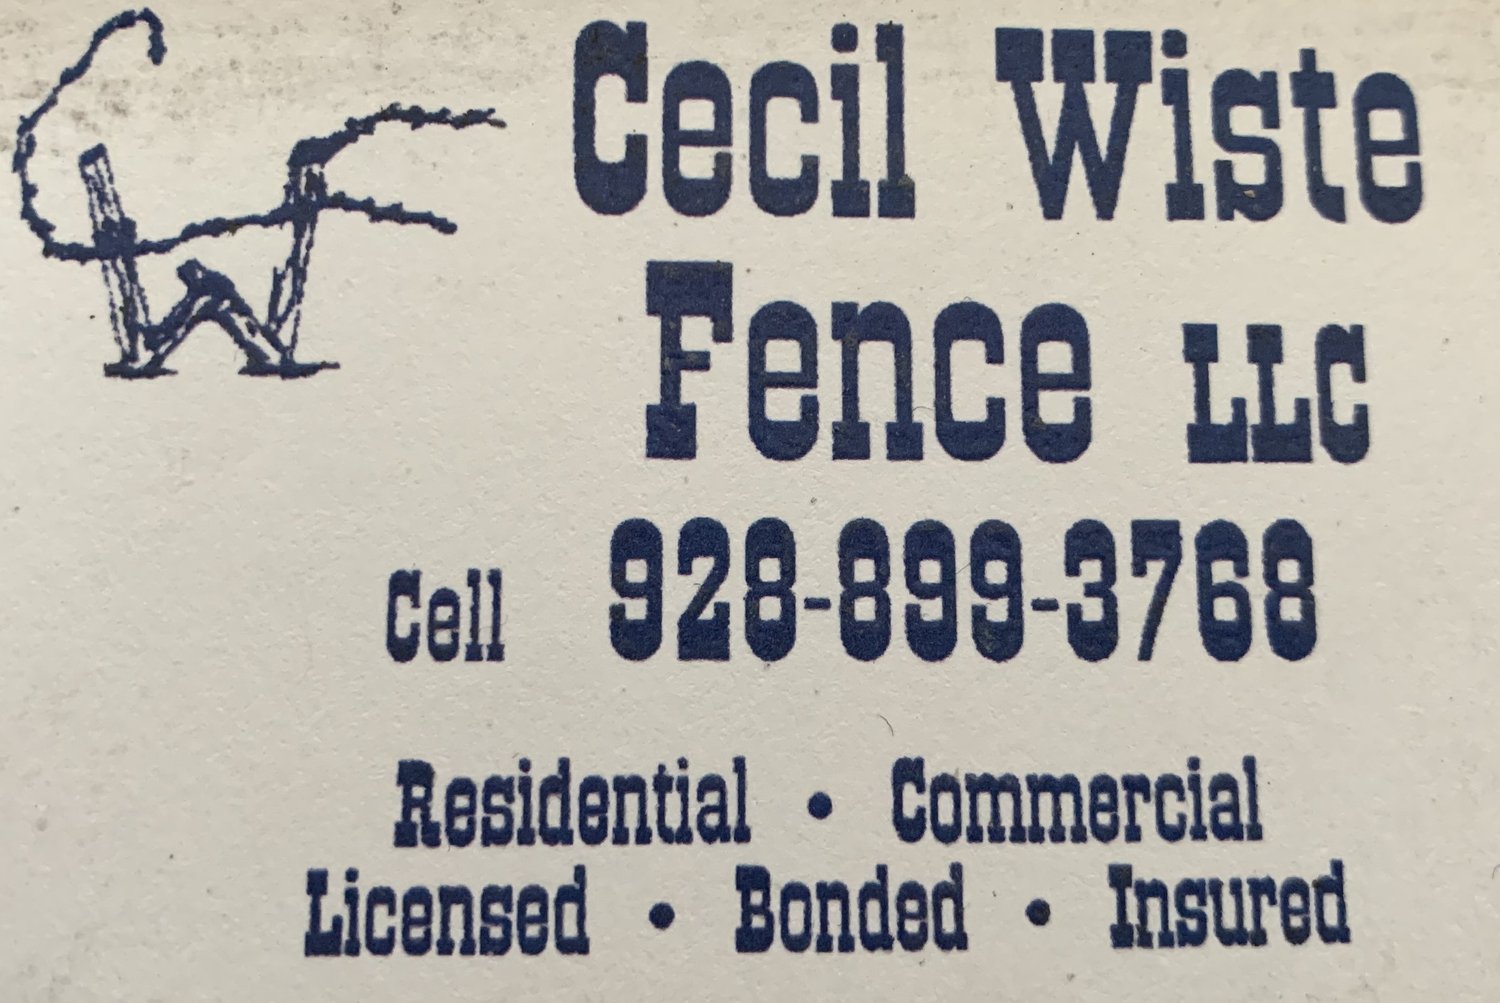 Cecil Wiste Fence